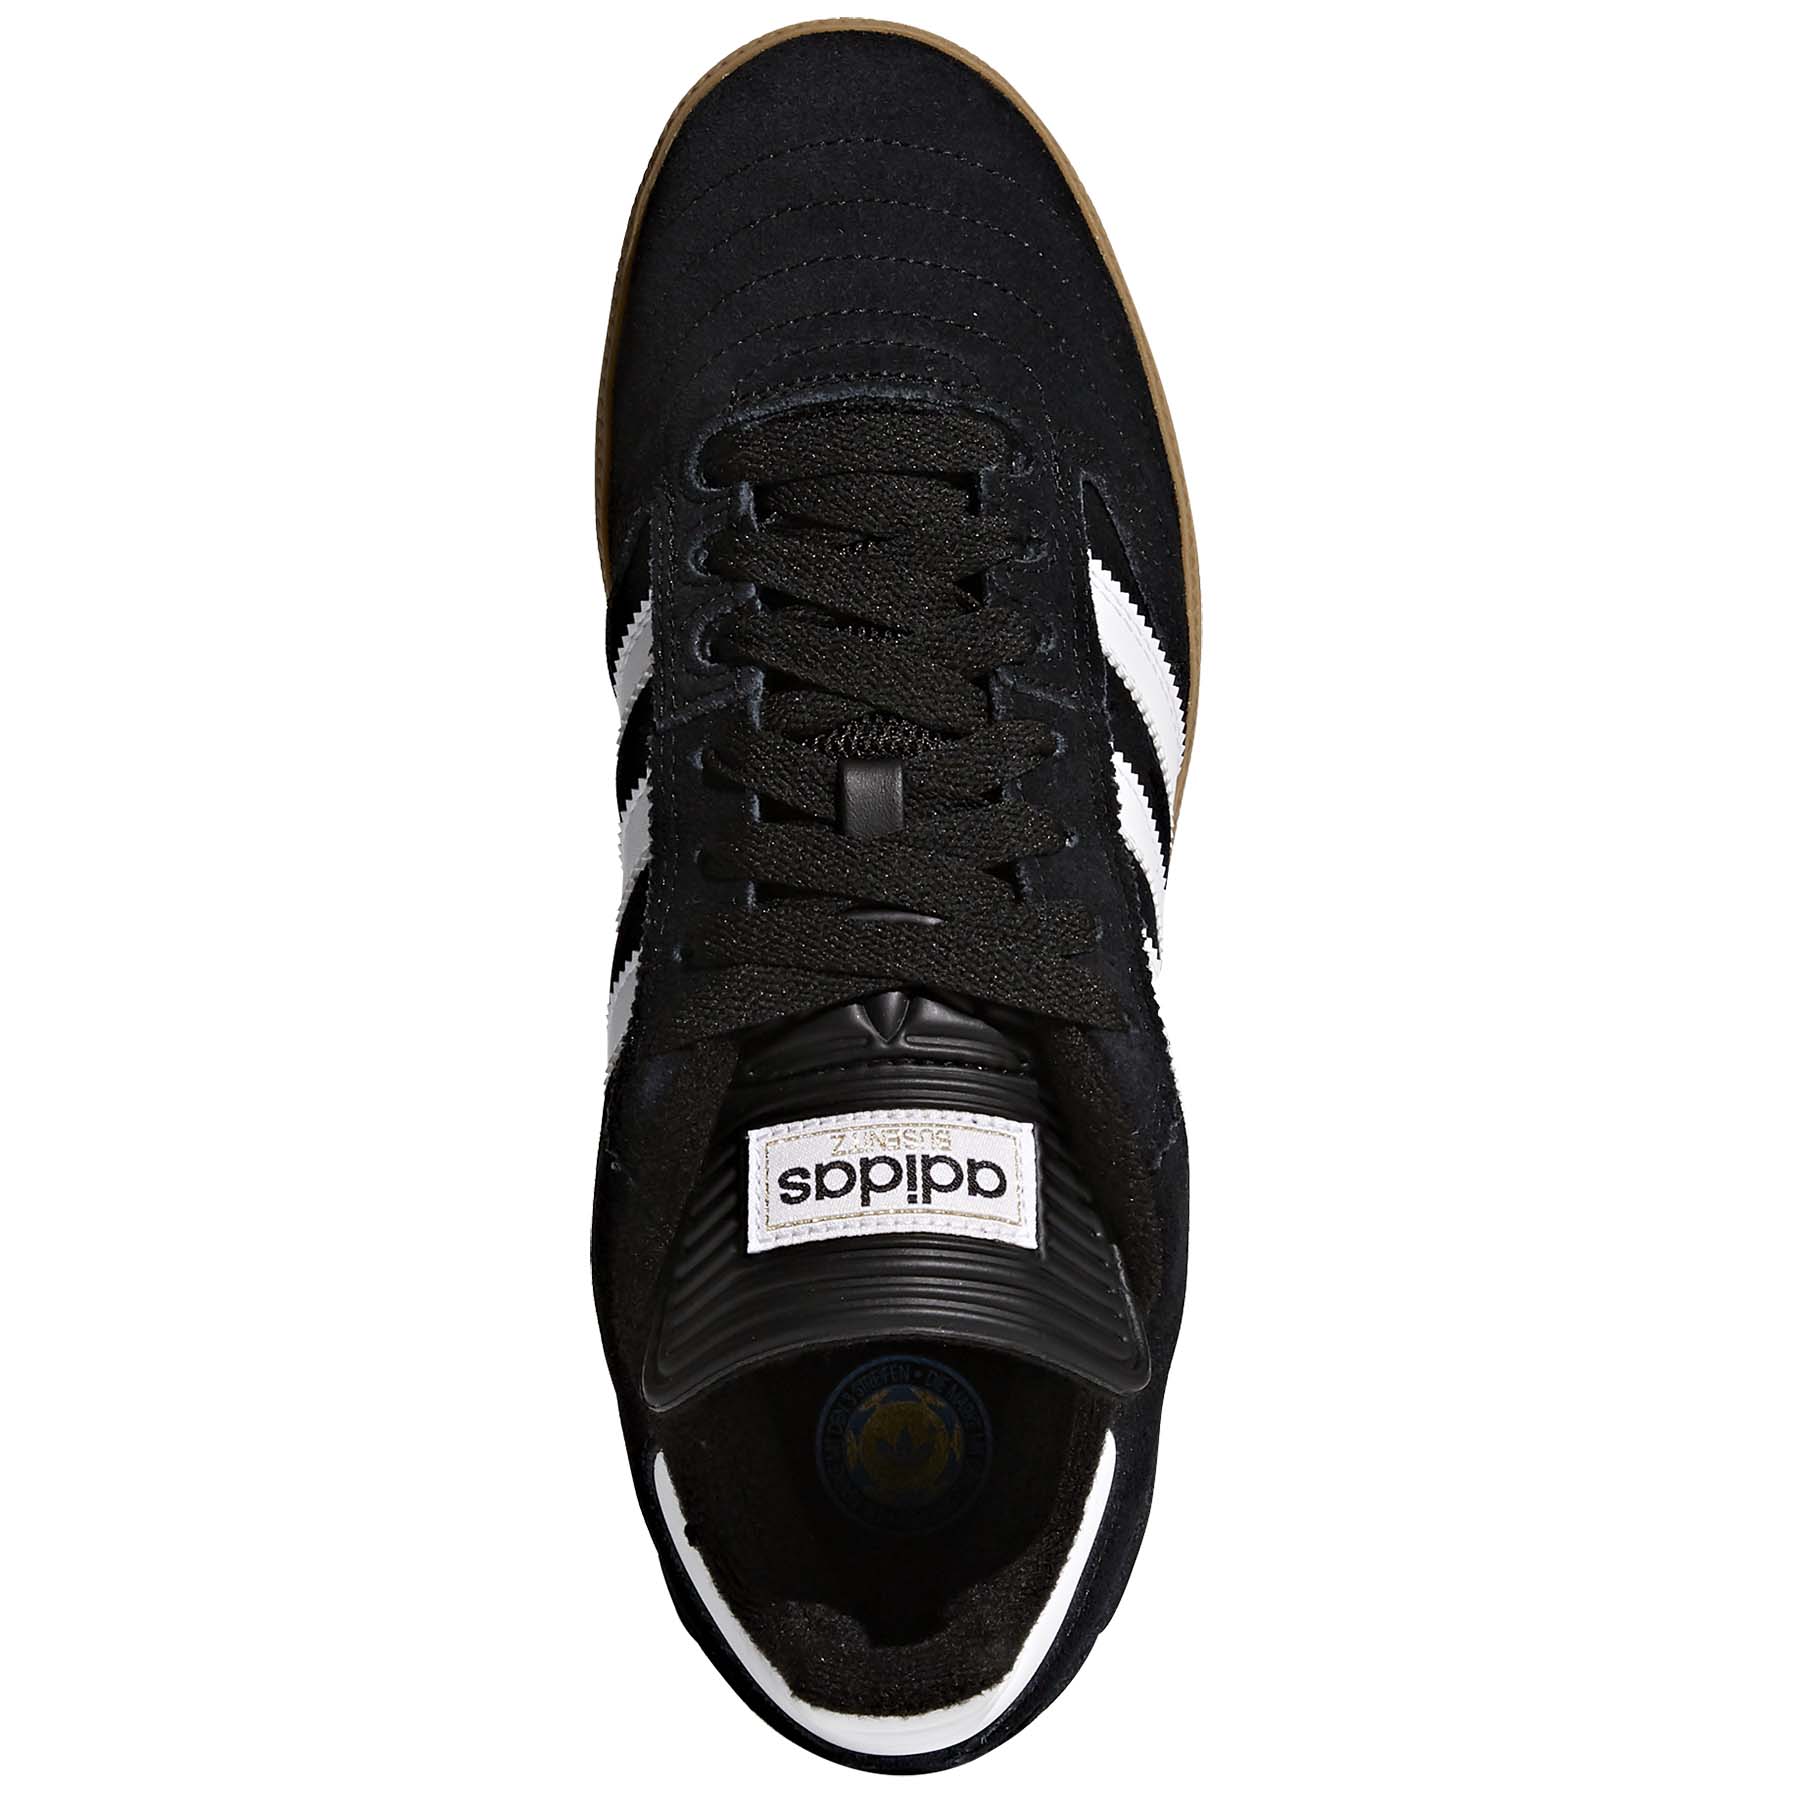 Adidas Busenitz Men's Trainers/Skate Shoes